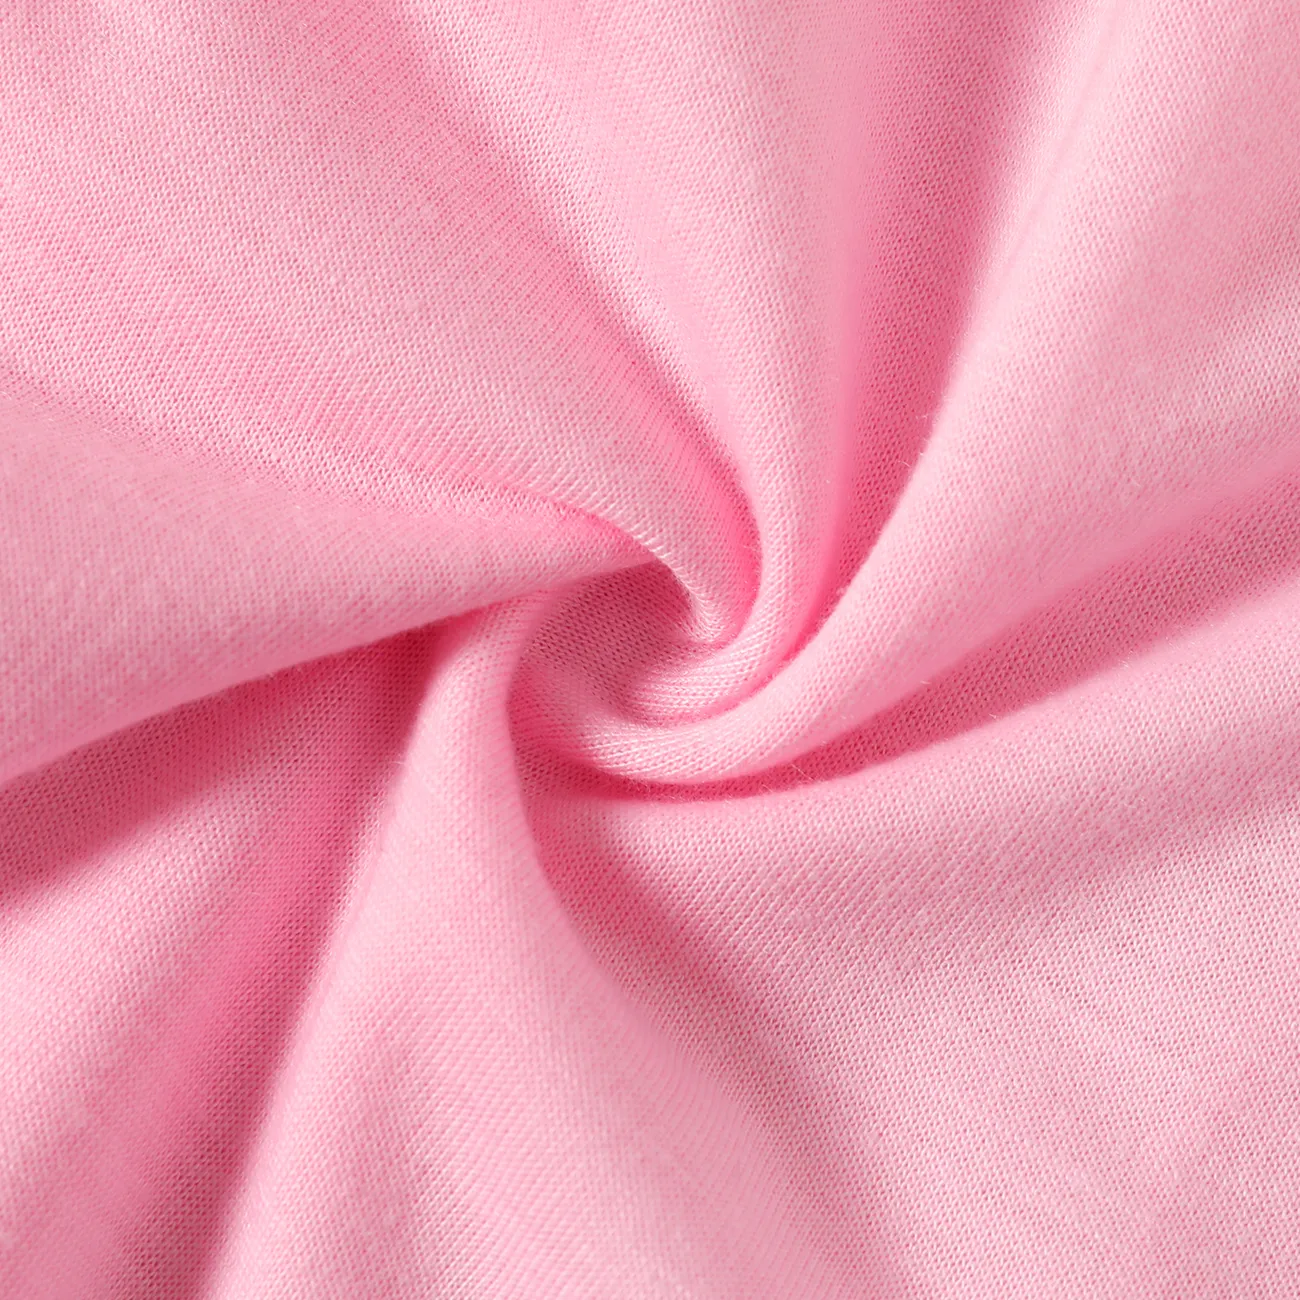 Kid Girl Colorblock Elasticized Shorts Pink big image 1